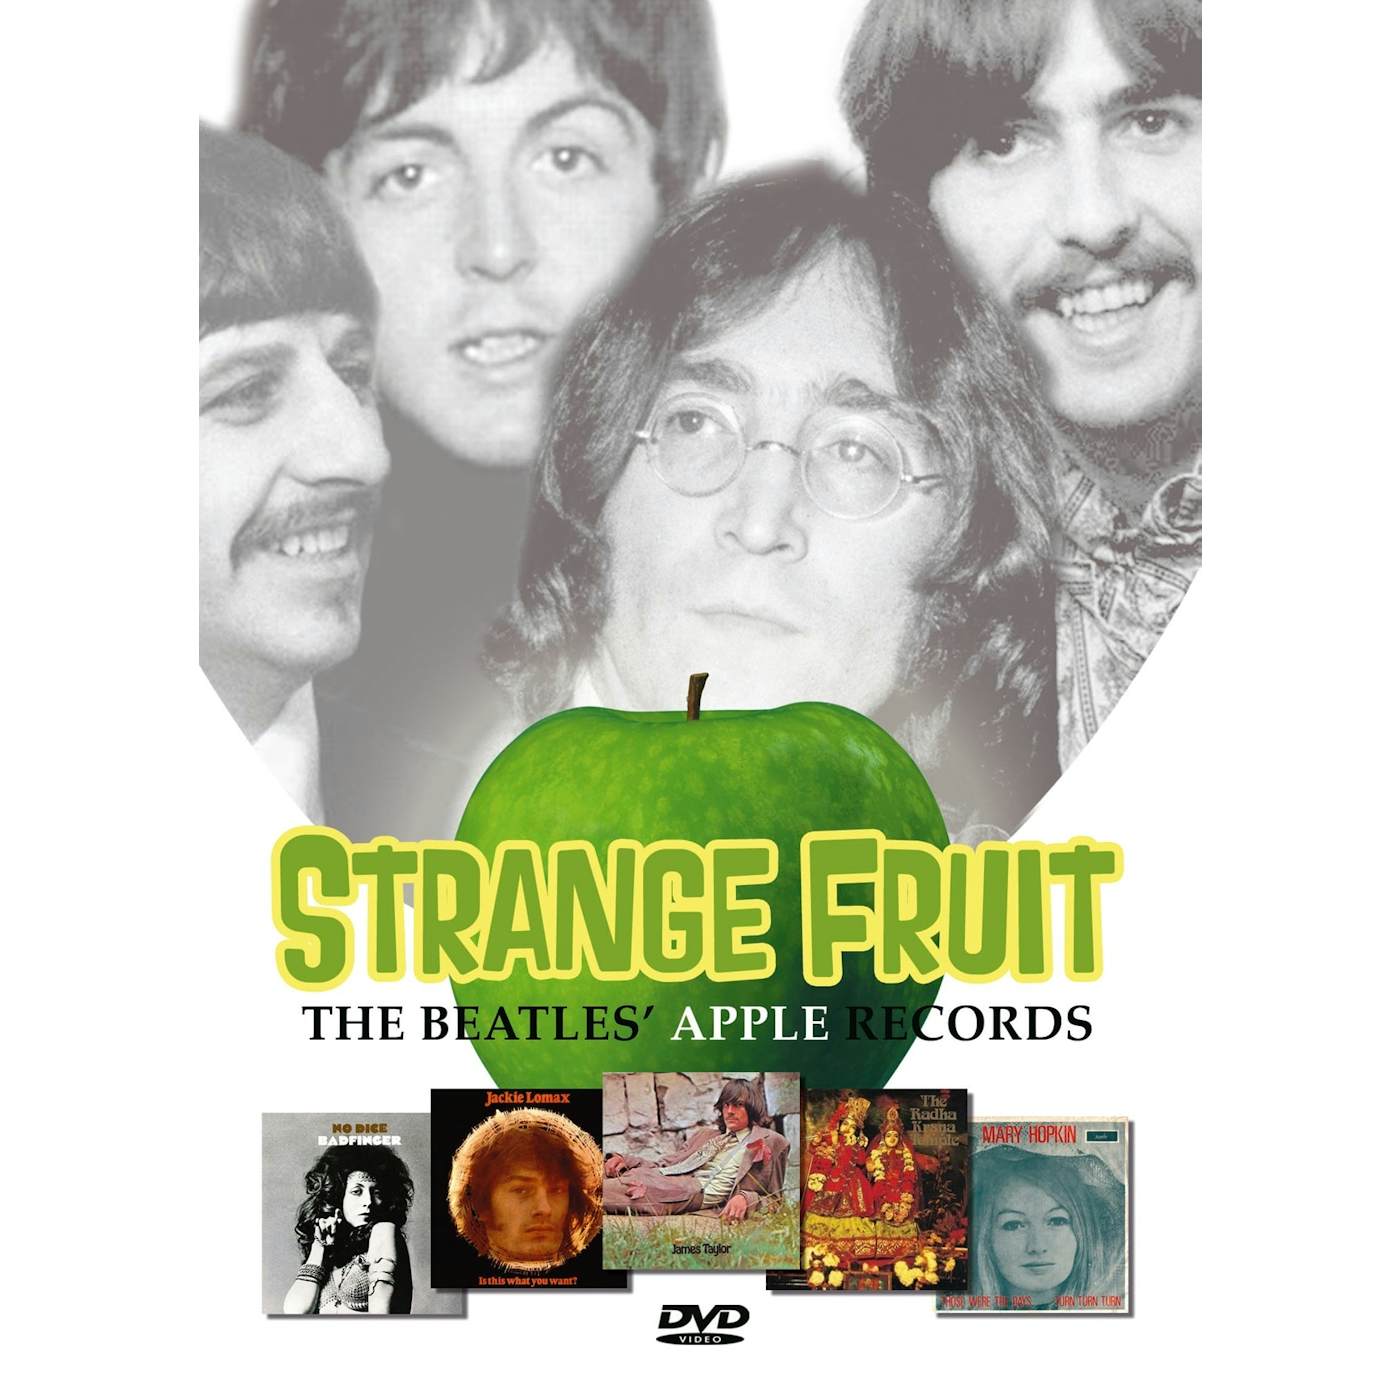 Beatles DVD - Strange Fruit - The Beatles' Apple Records